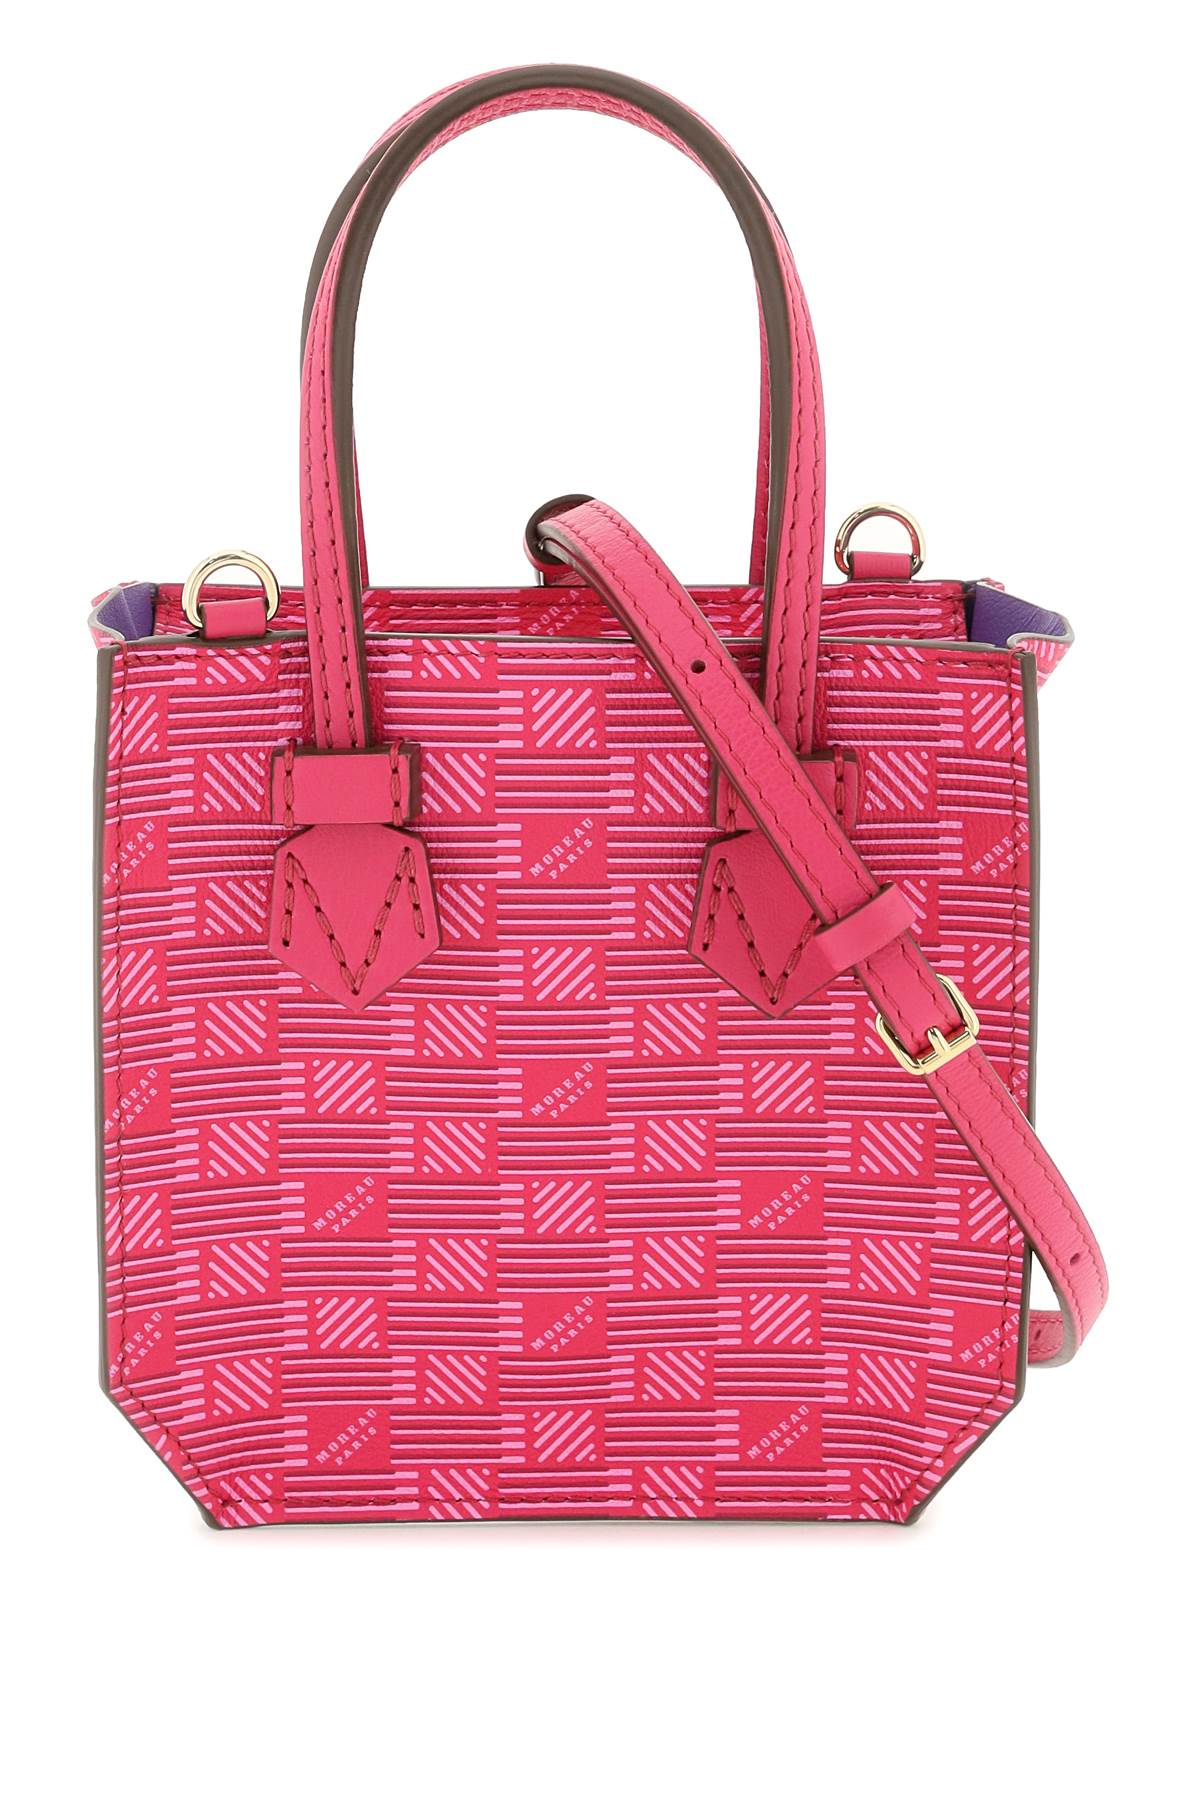 Fuchsia Mini Handbag | Iconic Monogram Motif | Smooth Leather Interior